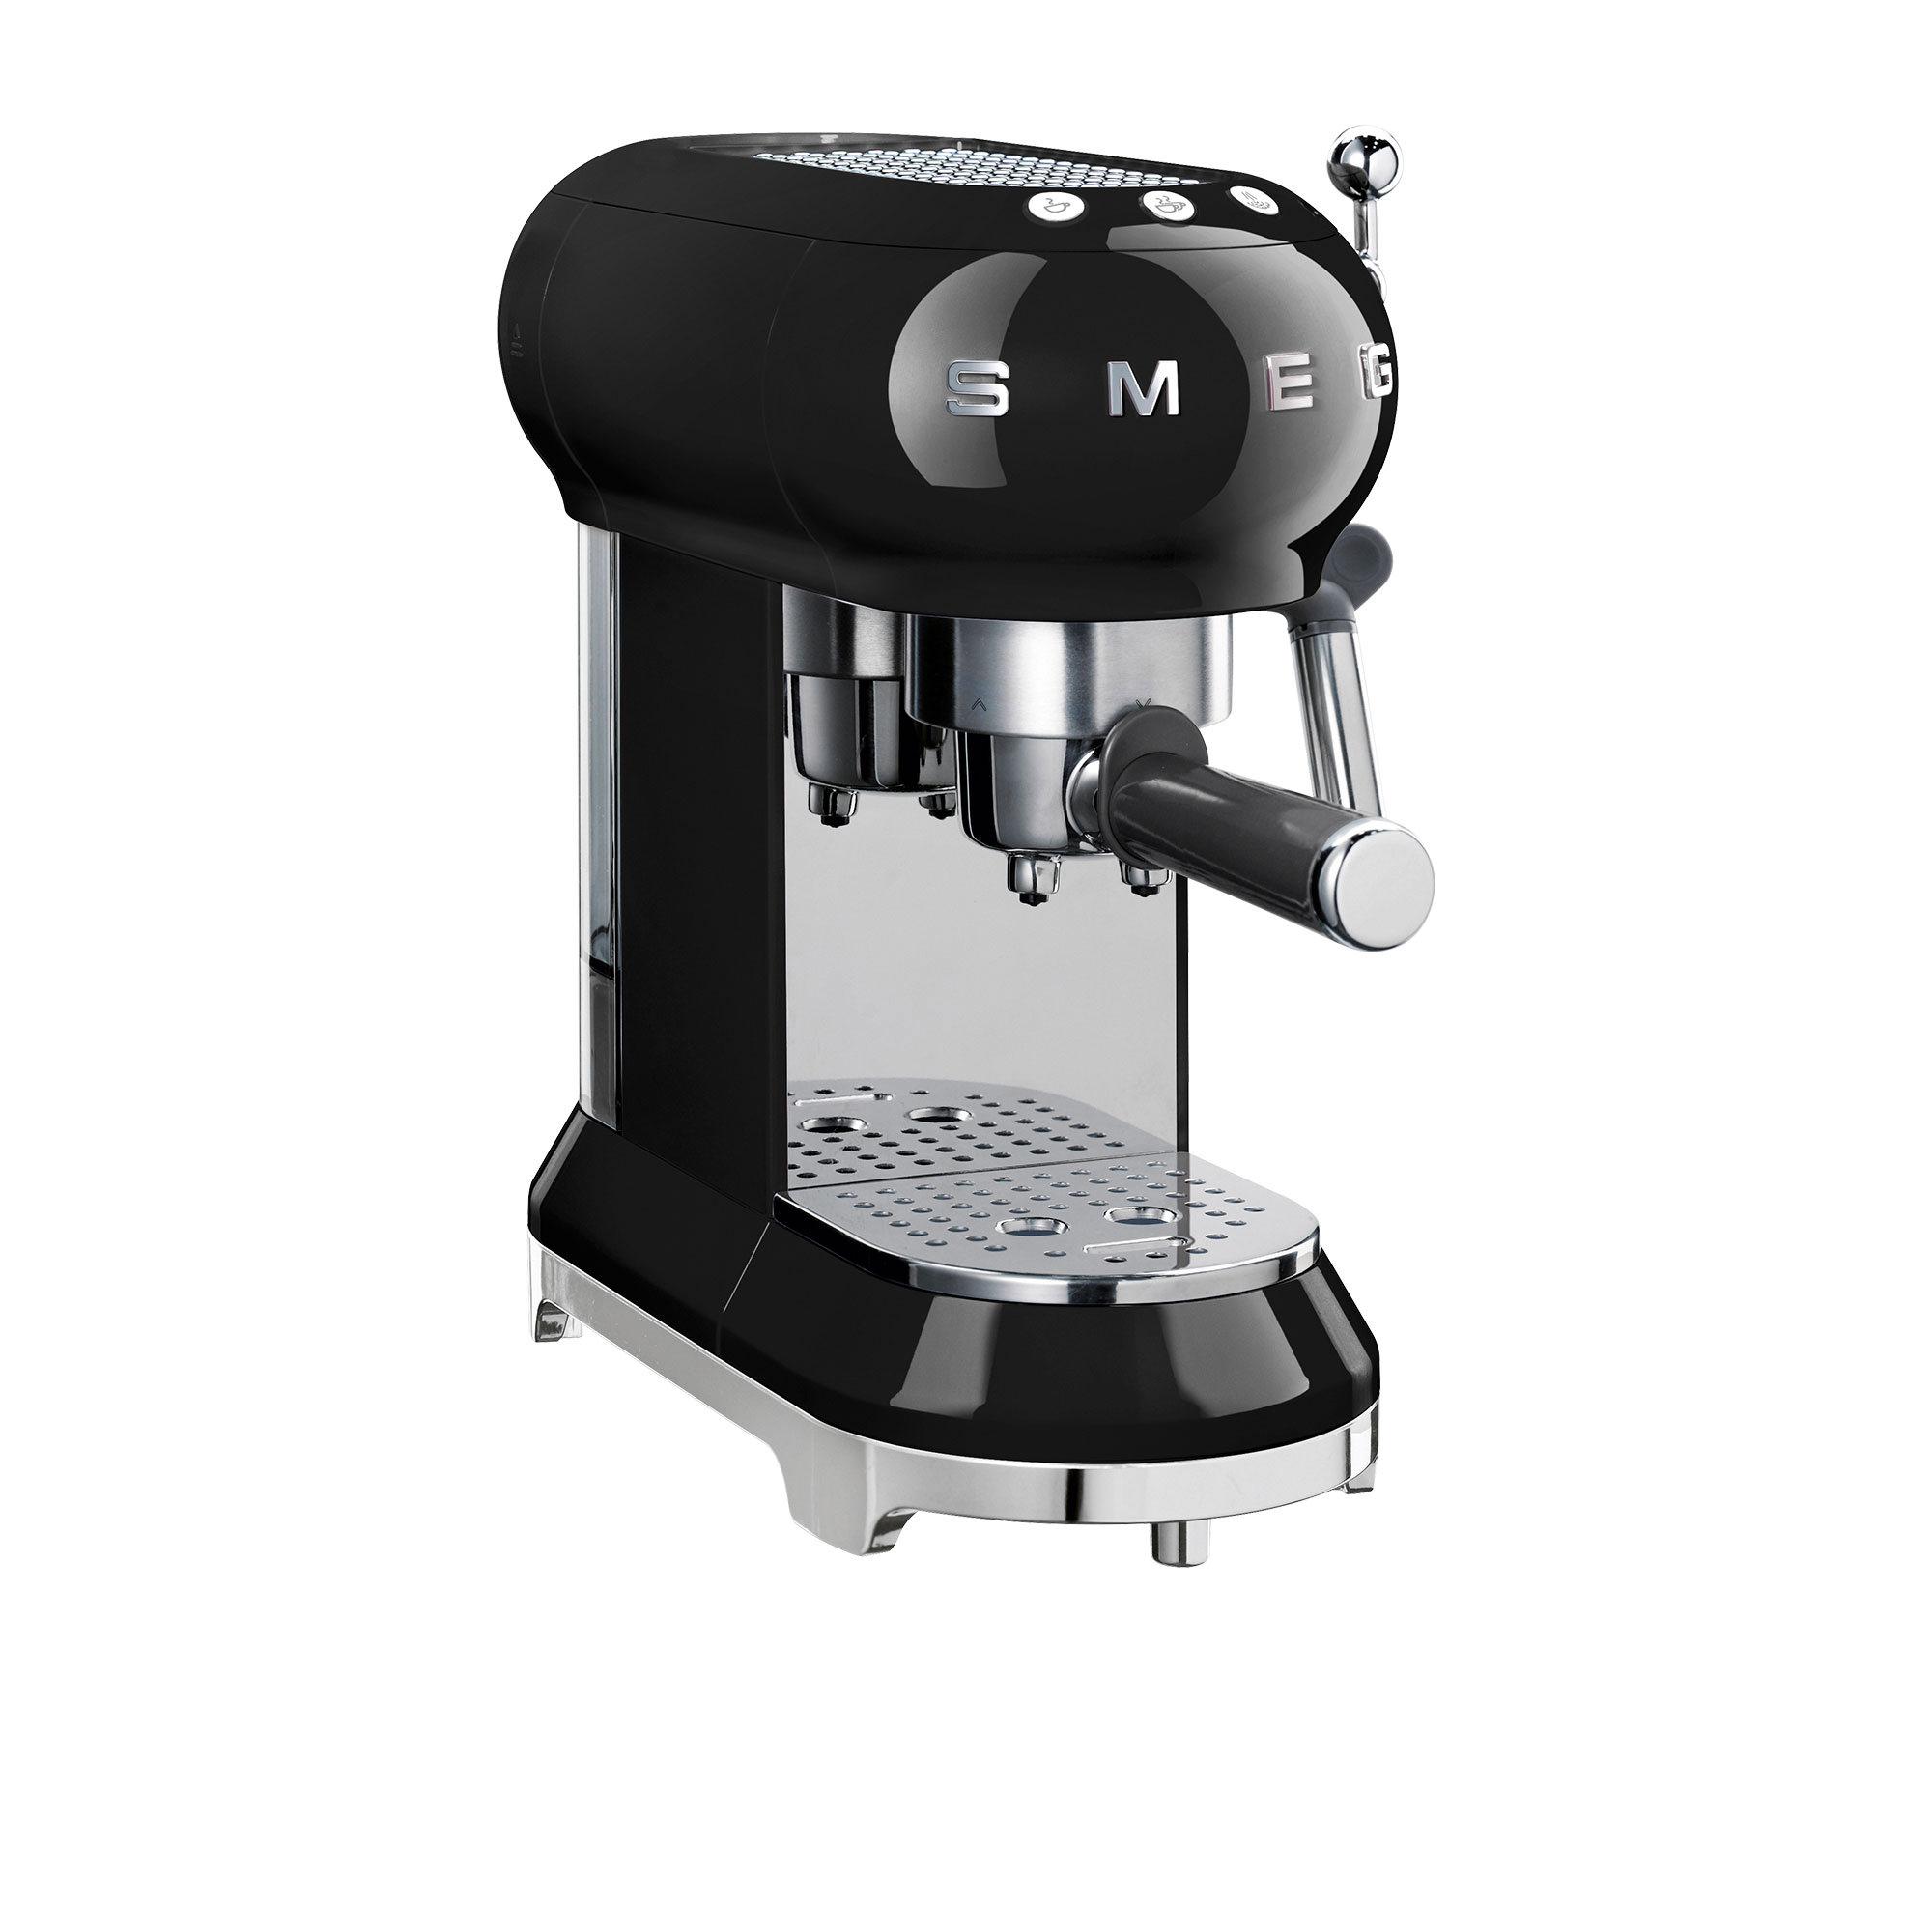 Smeg 50's Retro Style Espresso Coffee Machine Black Image 1